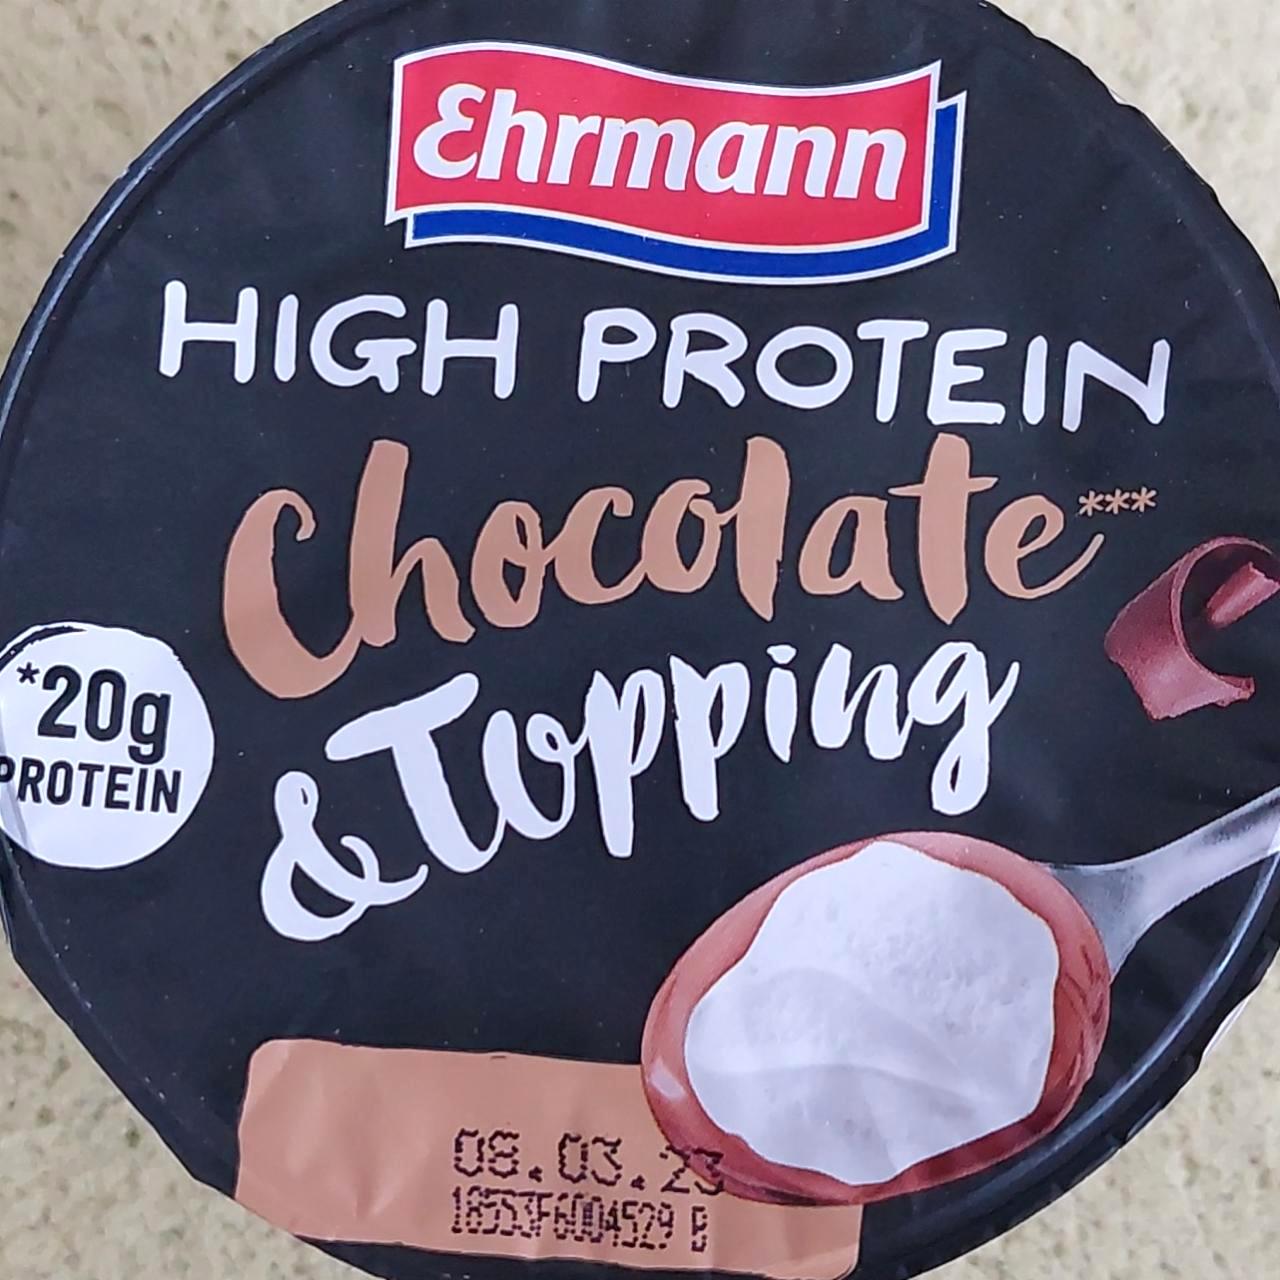 Képek - High Protein Chocolate & Topping Ehrmann